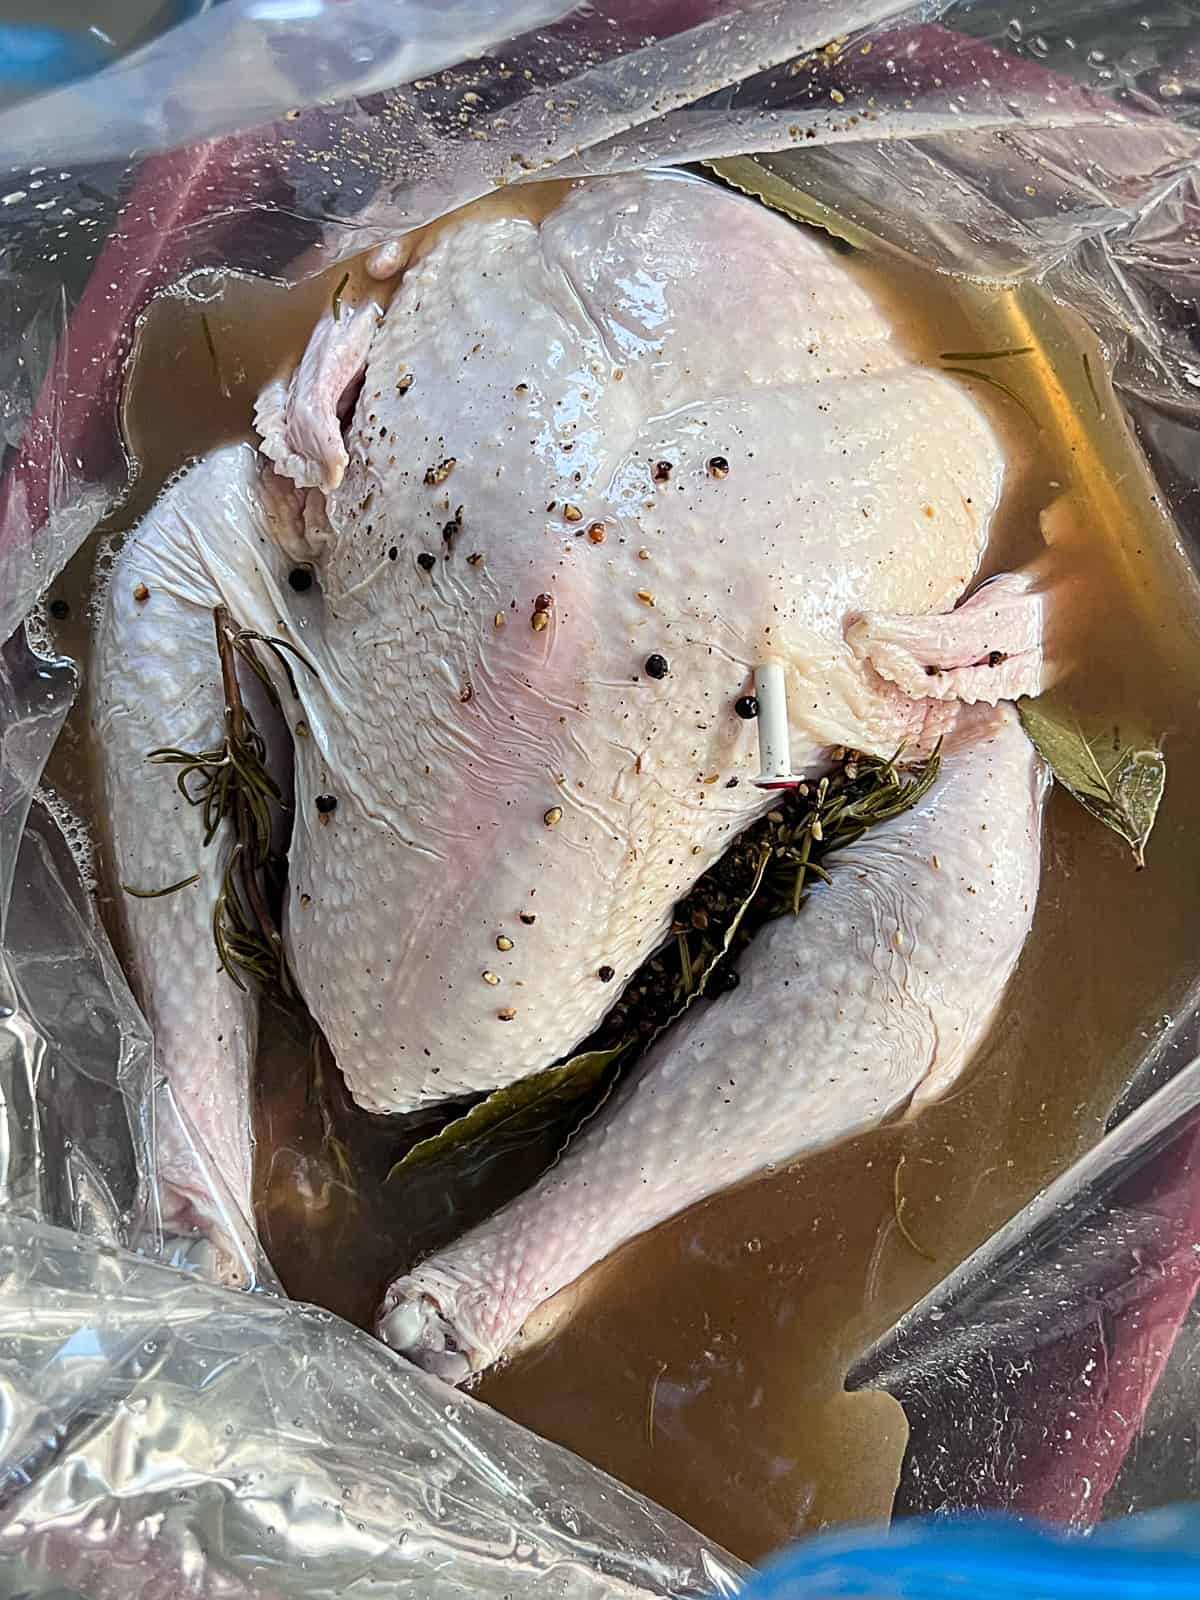 Closeup of Turkey Brining In A Bag